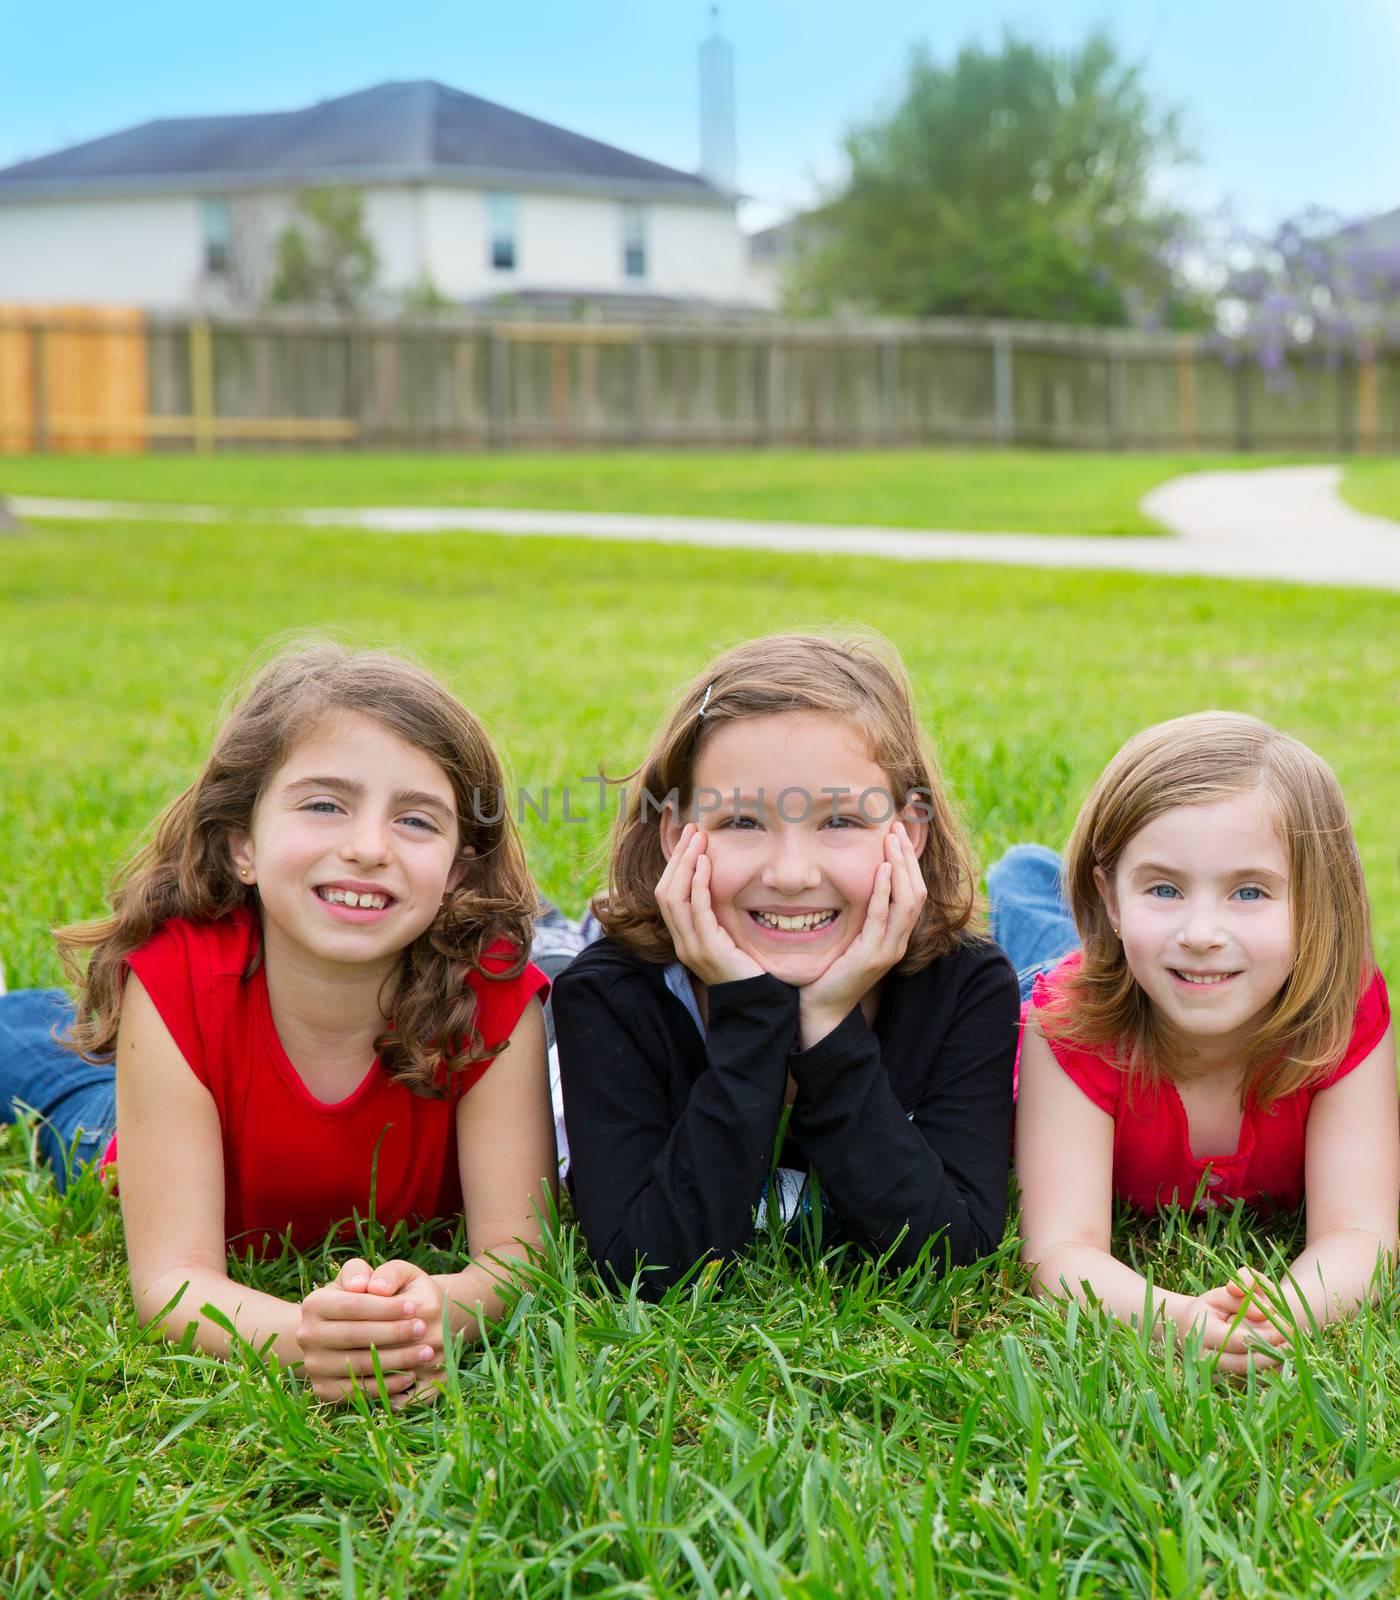 Children girls group lying on lawn grass smiling happy by lunamarina